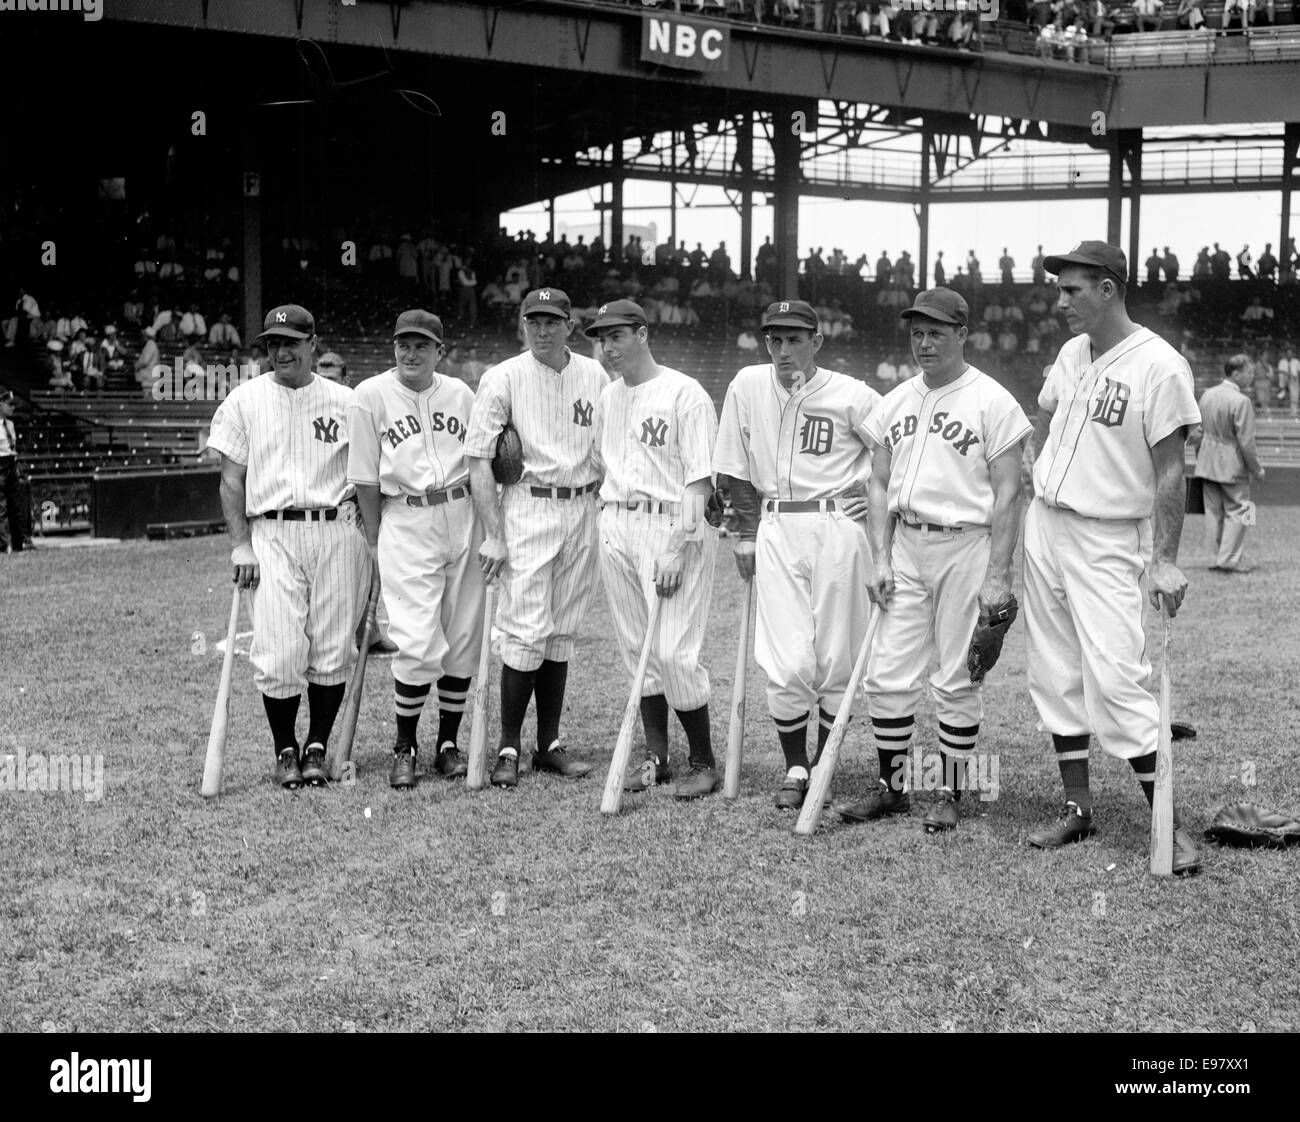 US-amerikanischer Baseball-Spieler, Lou Gehrig, Joe Cronin, Bill Dickey, Joe DiMaggio, Charley Gehringer, Jimmie Foxx und Hank Greenberg Stockfoto